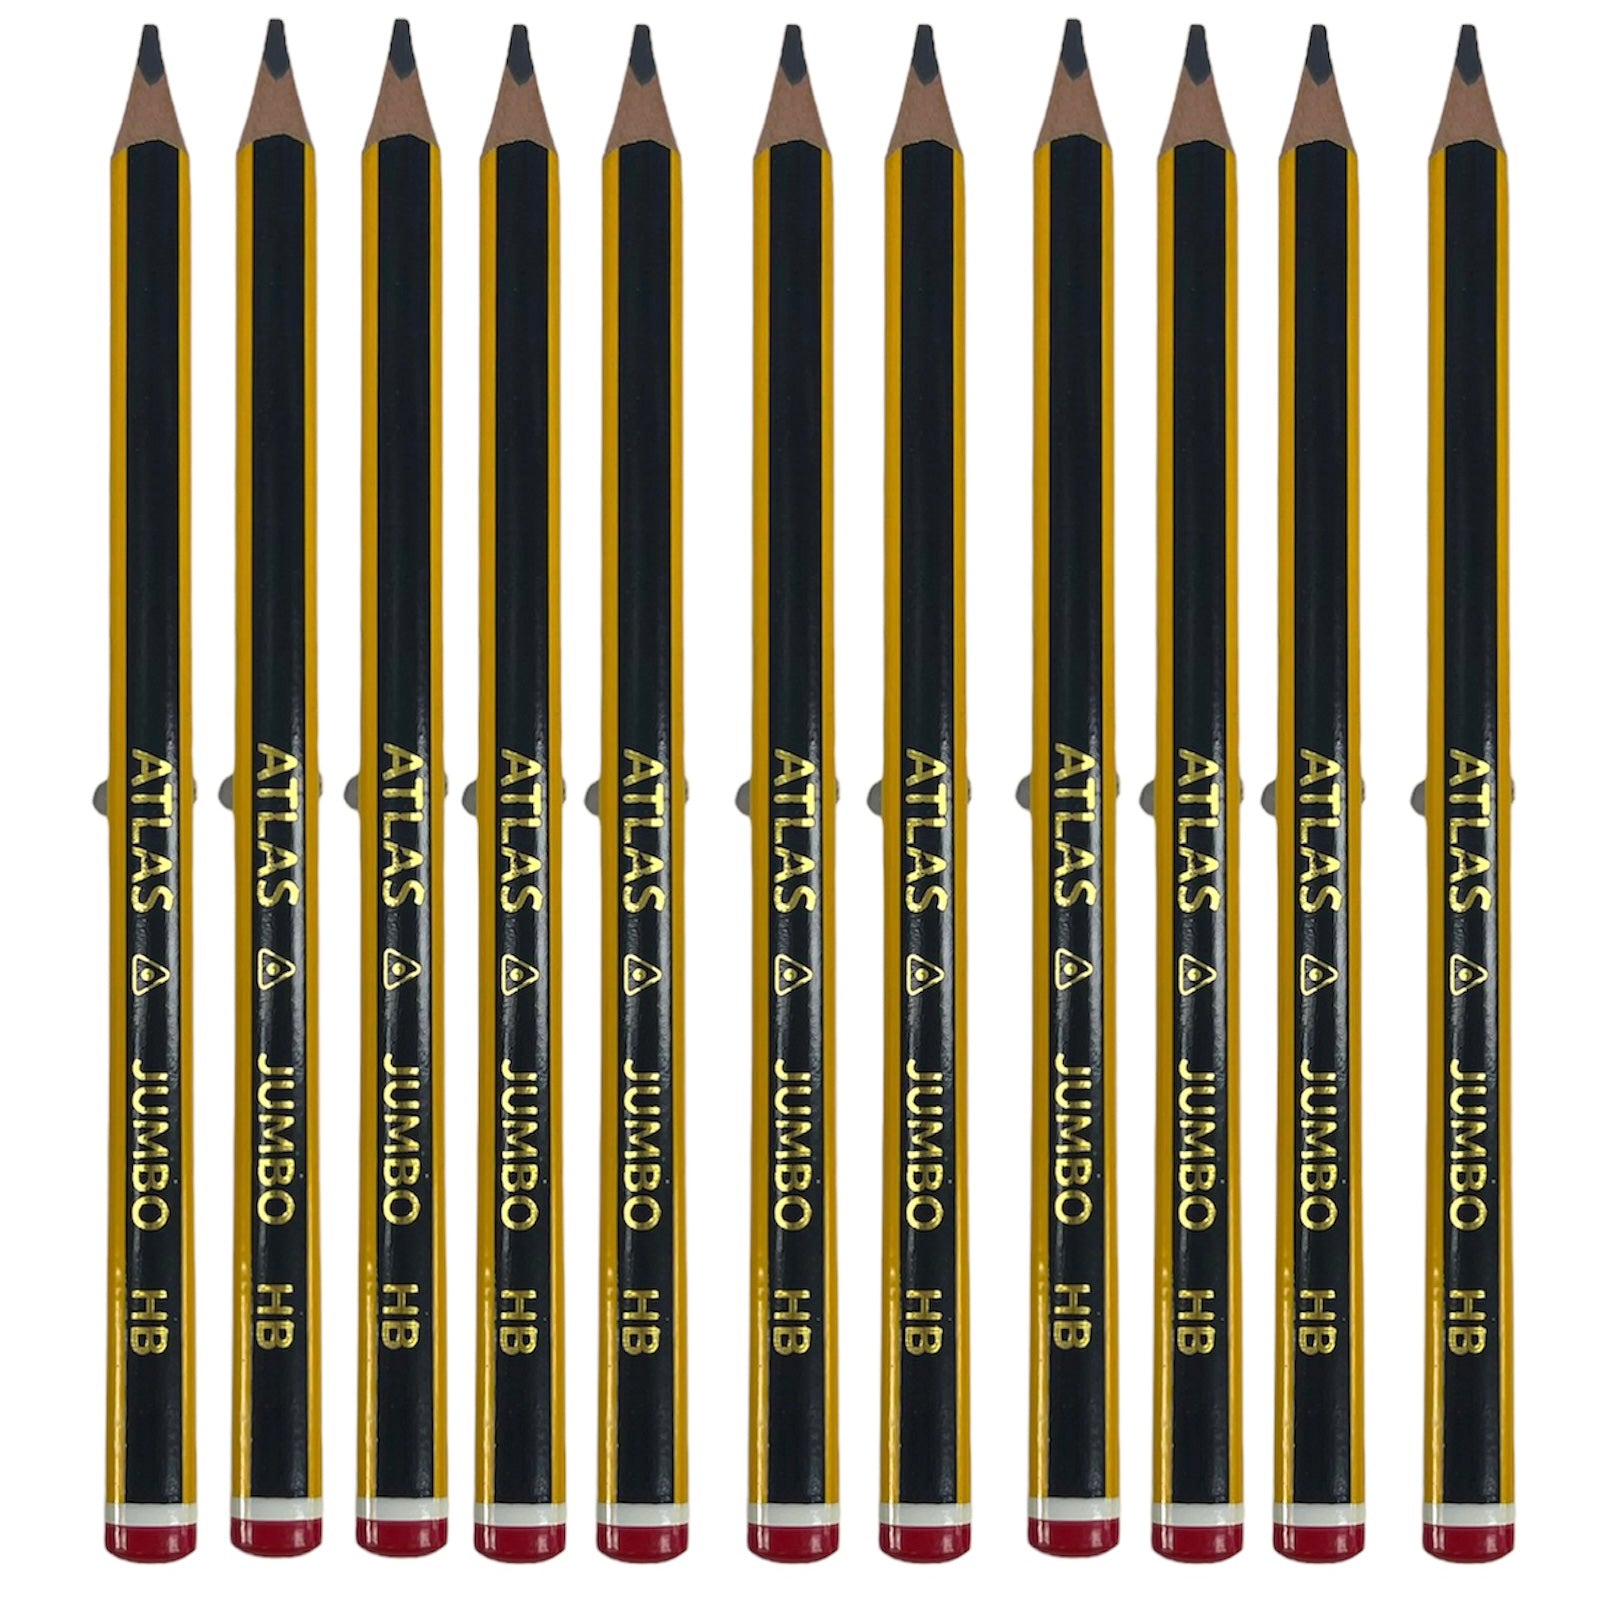 A&T Color Me Jumbo Pencil Pack 12 Pcs || اقلام رصاص جامبو اطلس اي اند تي كولور مي